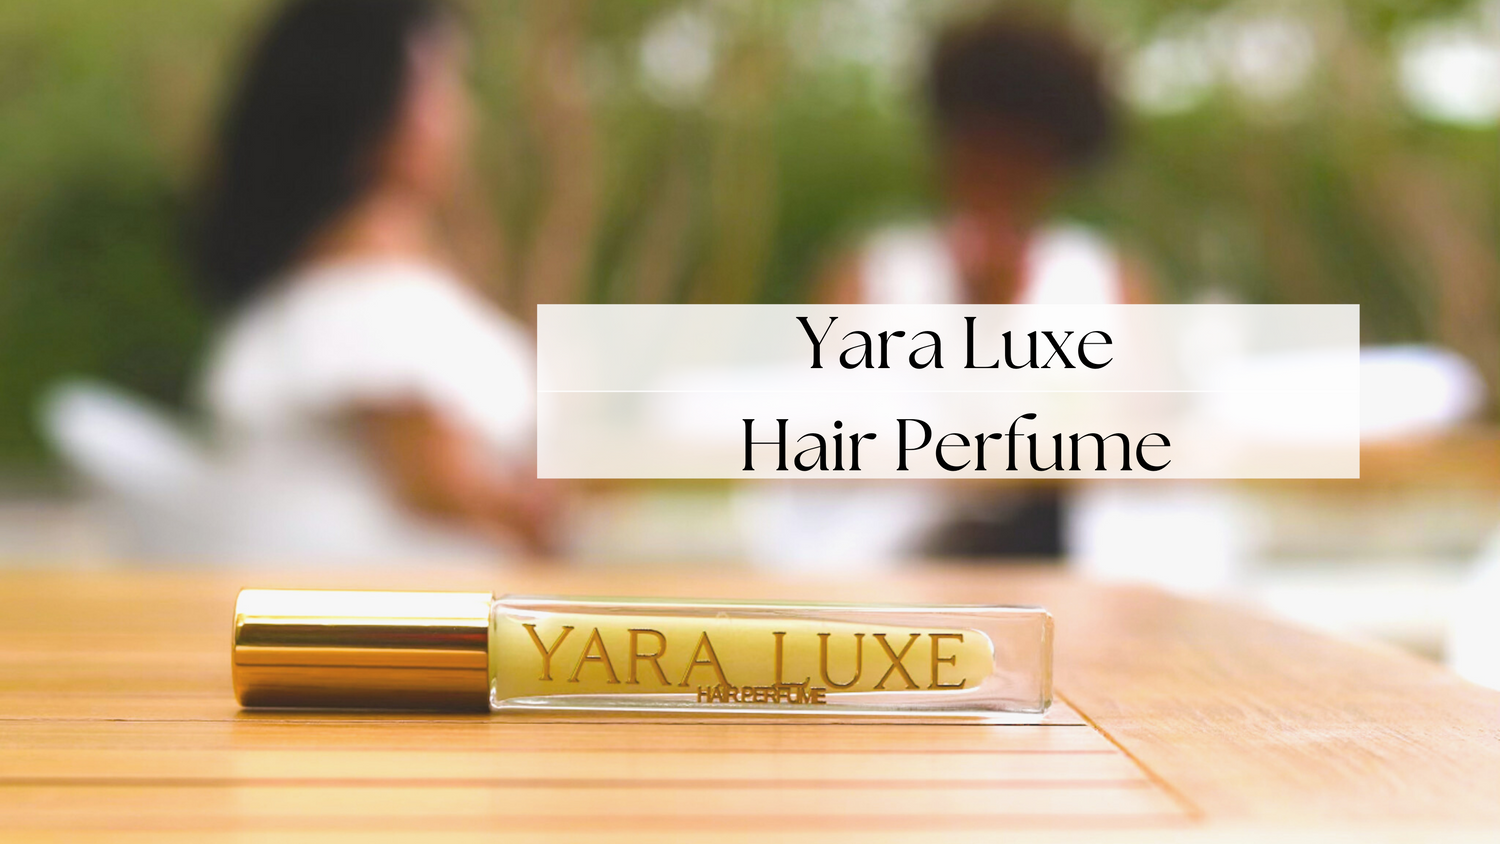 Yara Luxe Hair Perfume video